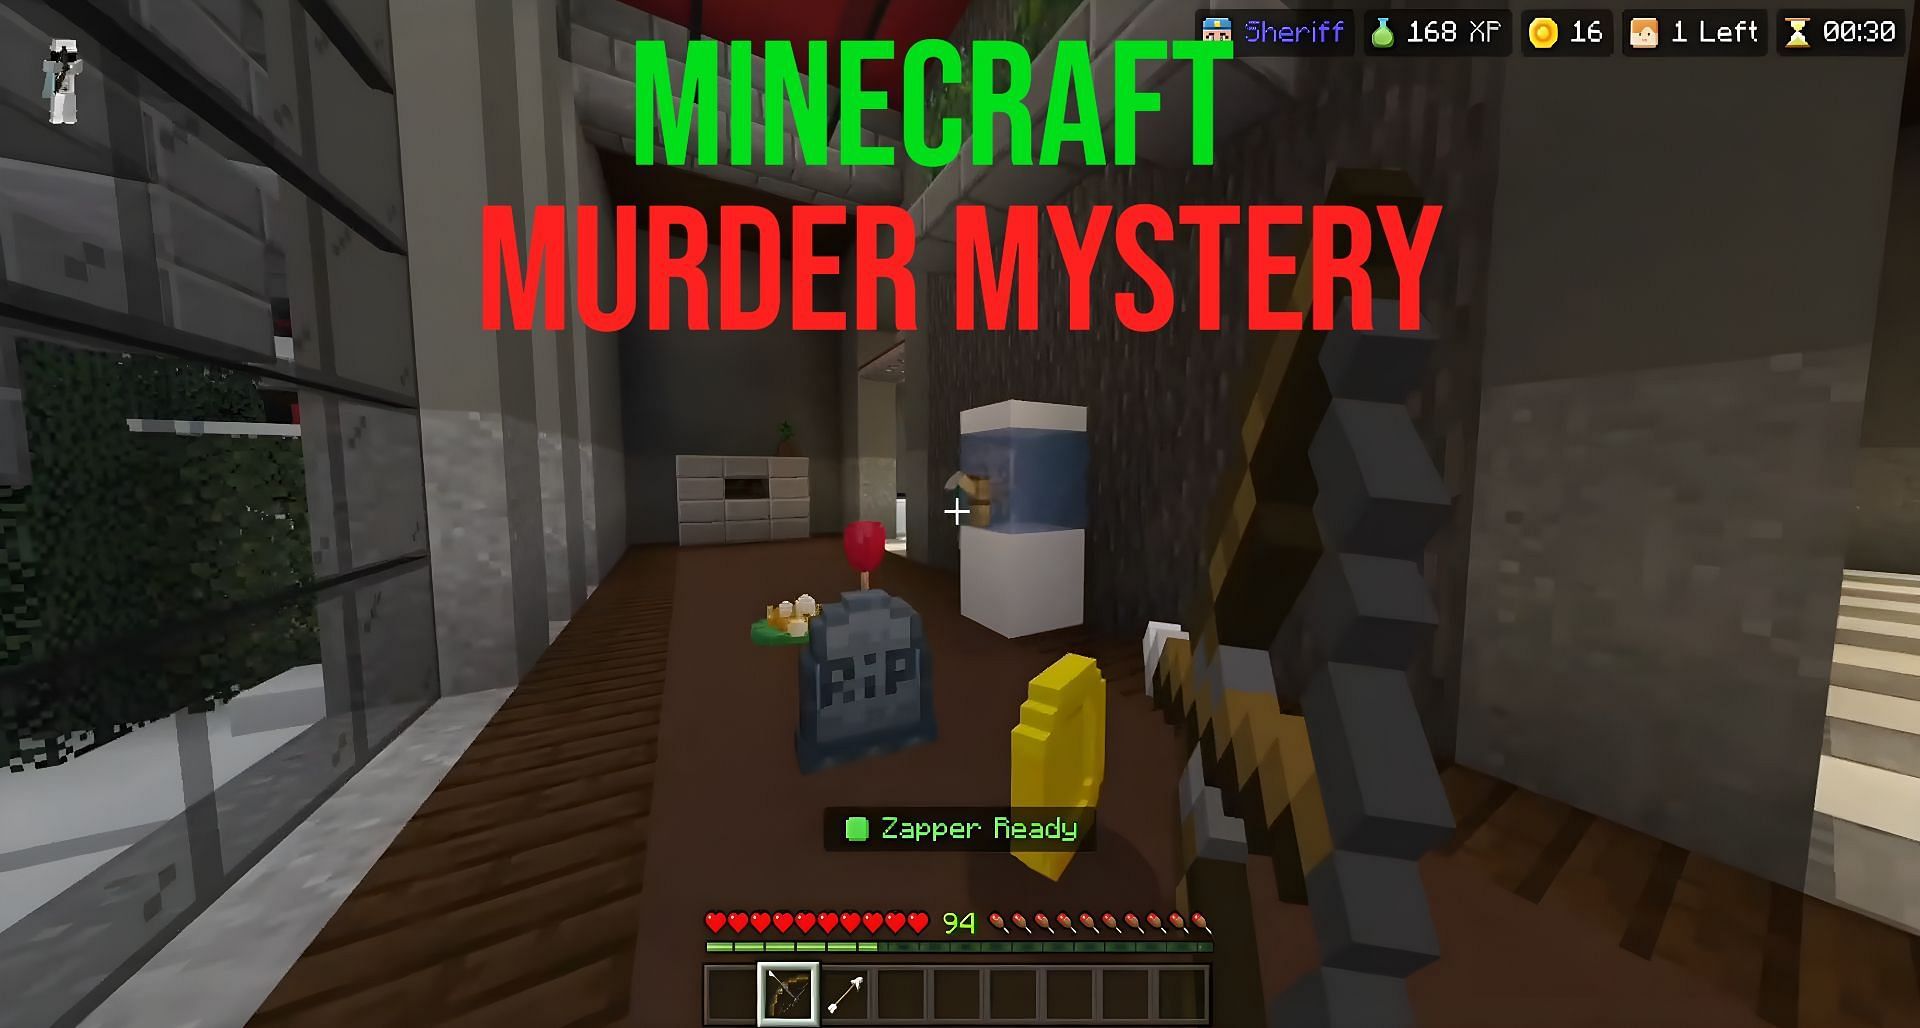 Trading Servers, Murder Mystery 2 Wiki